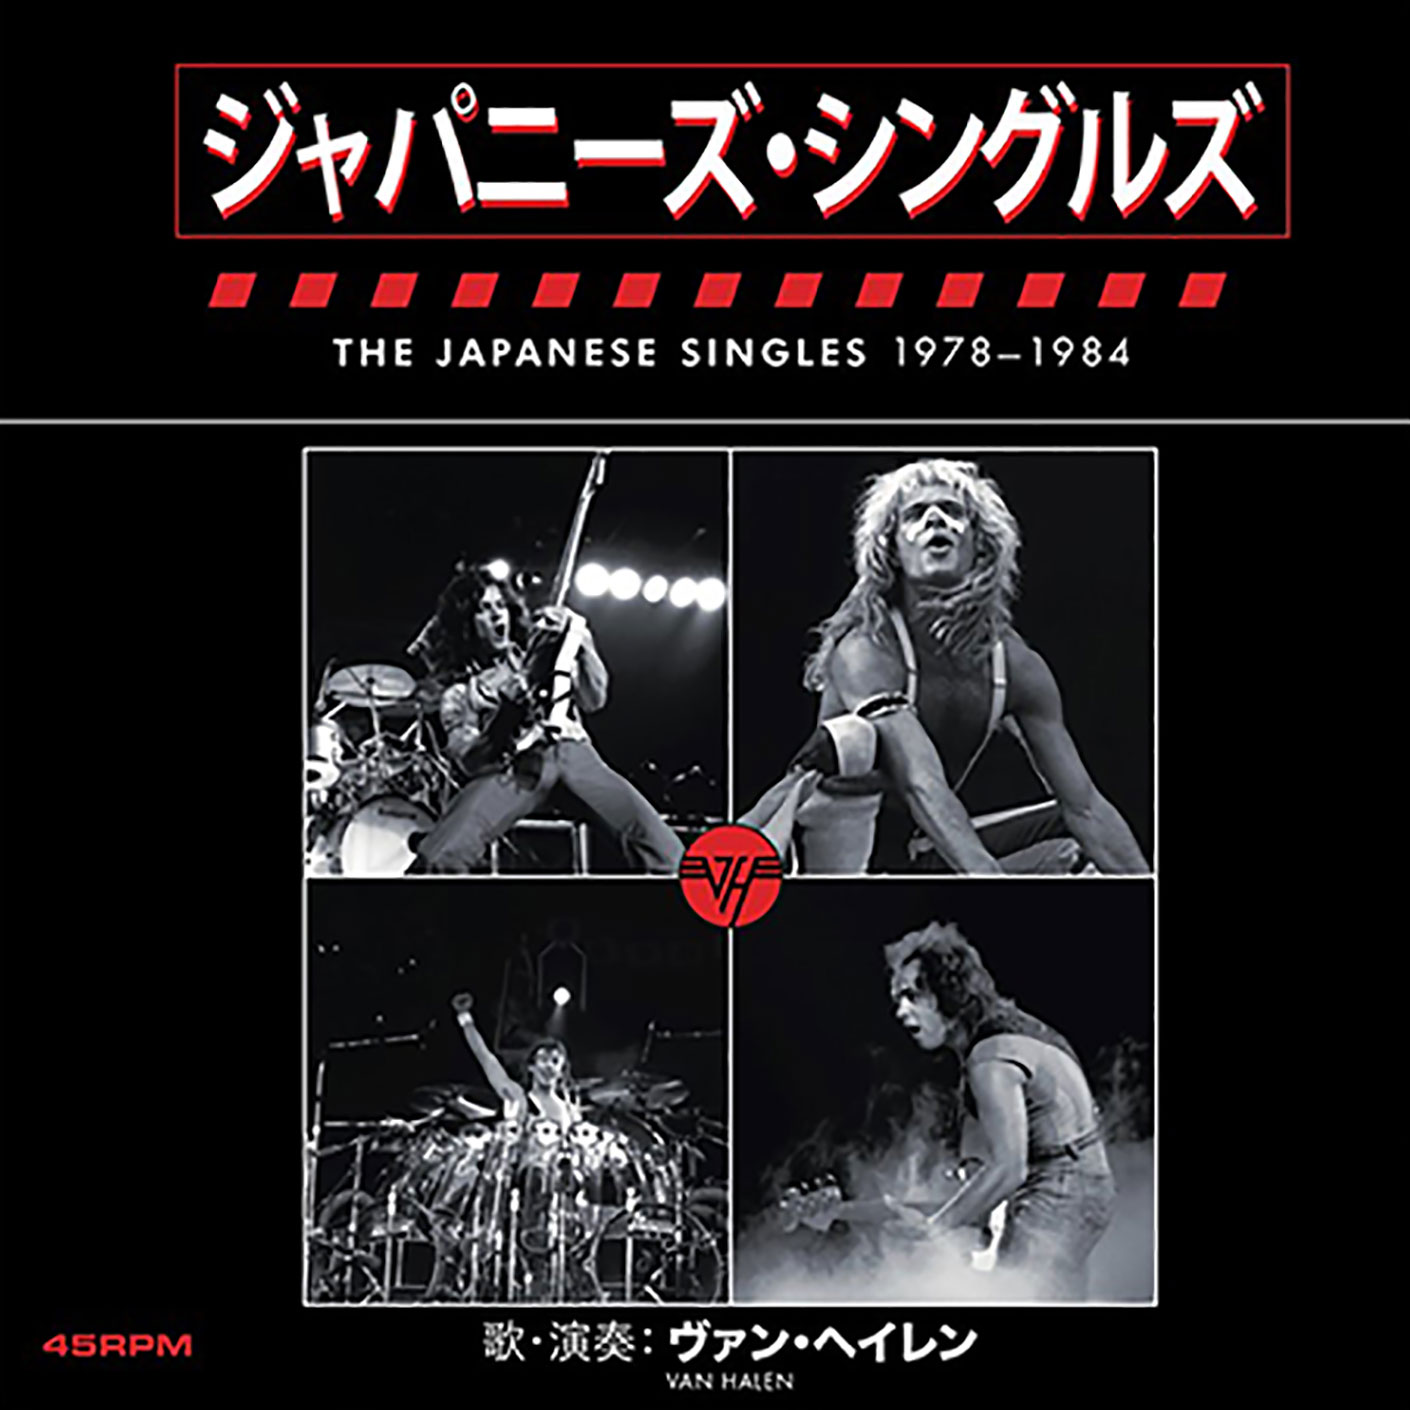 Van Halen The Japanese Singles 1978-1984 Box Set 45rpm 7